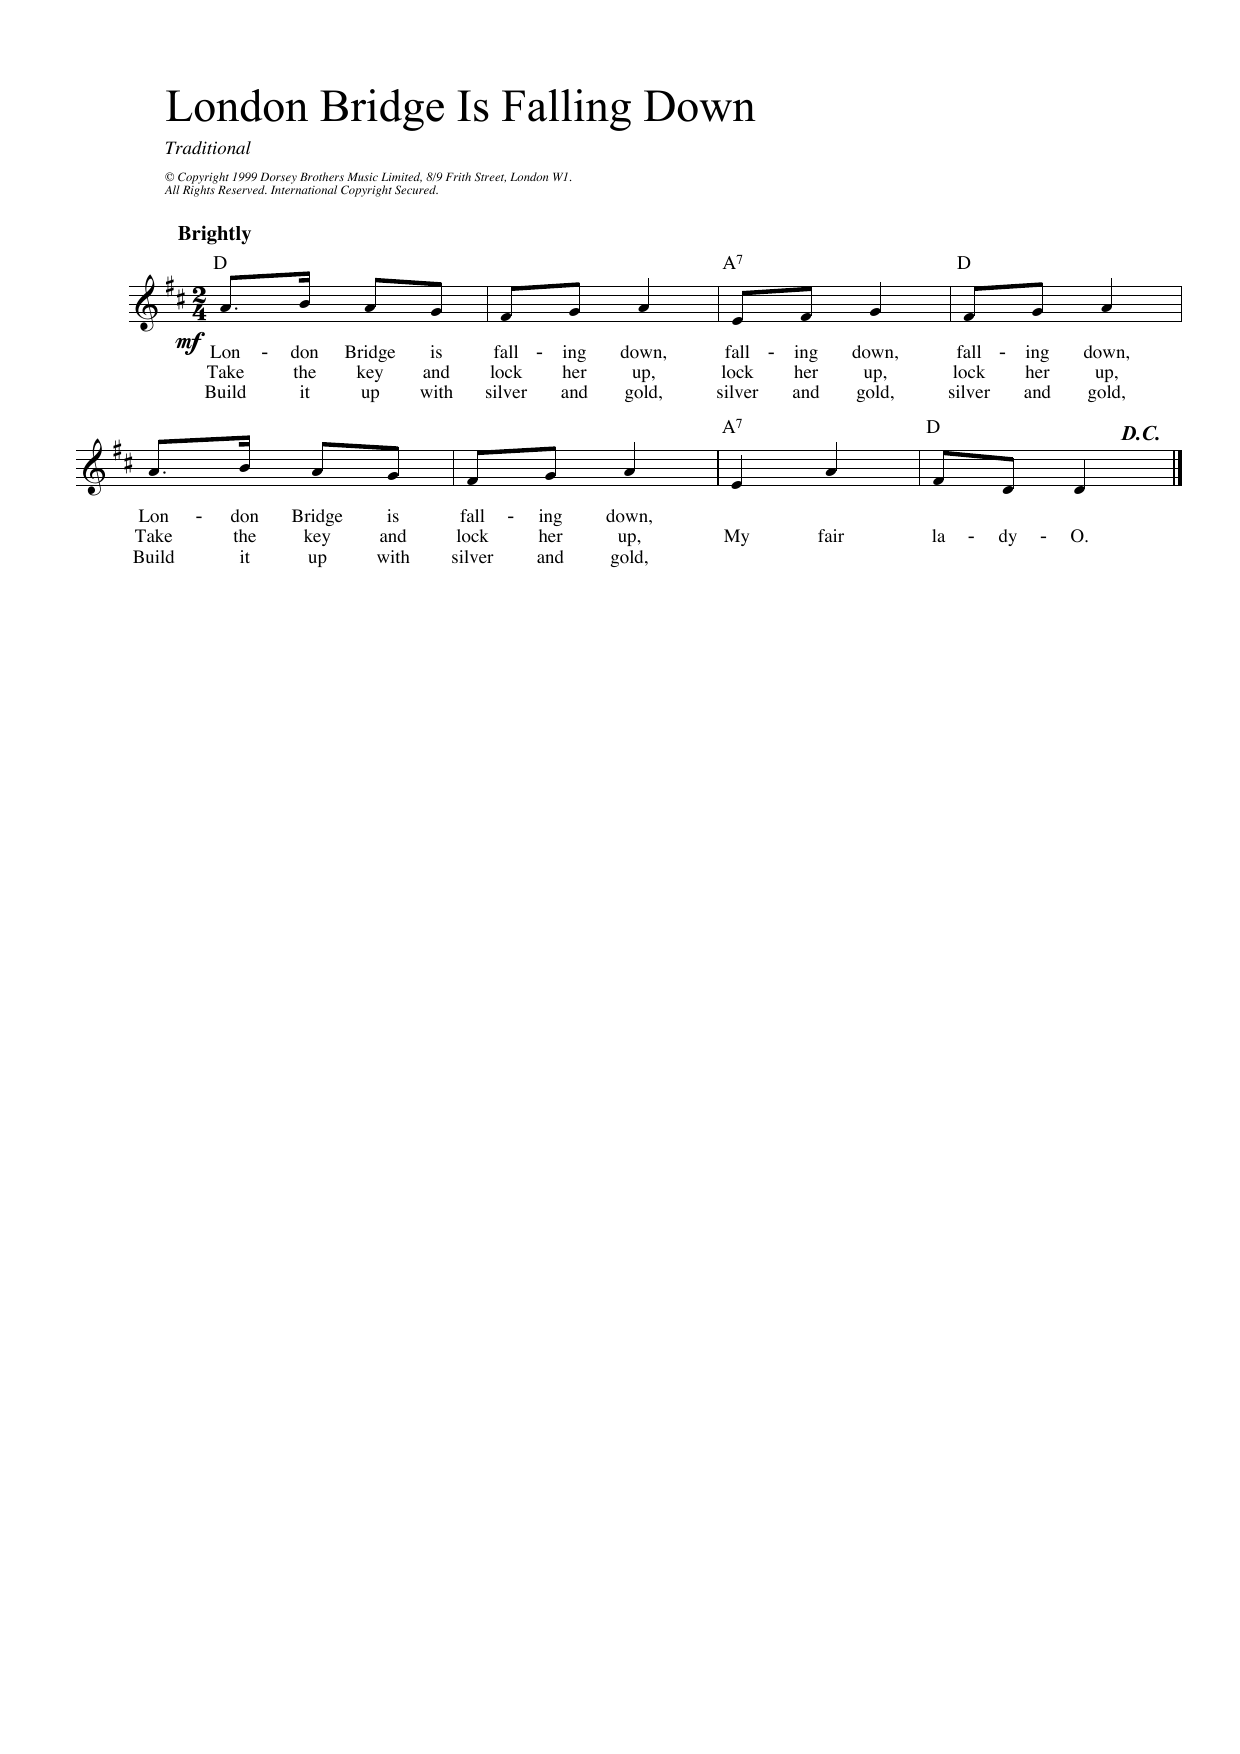 Traditional London Bridge sheet music notes and chords arranged for Guitar Chords/Lyrics